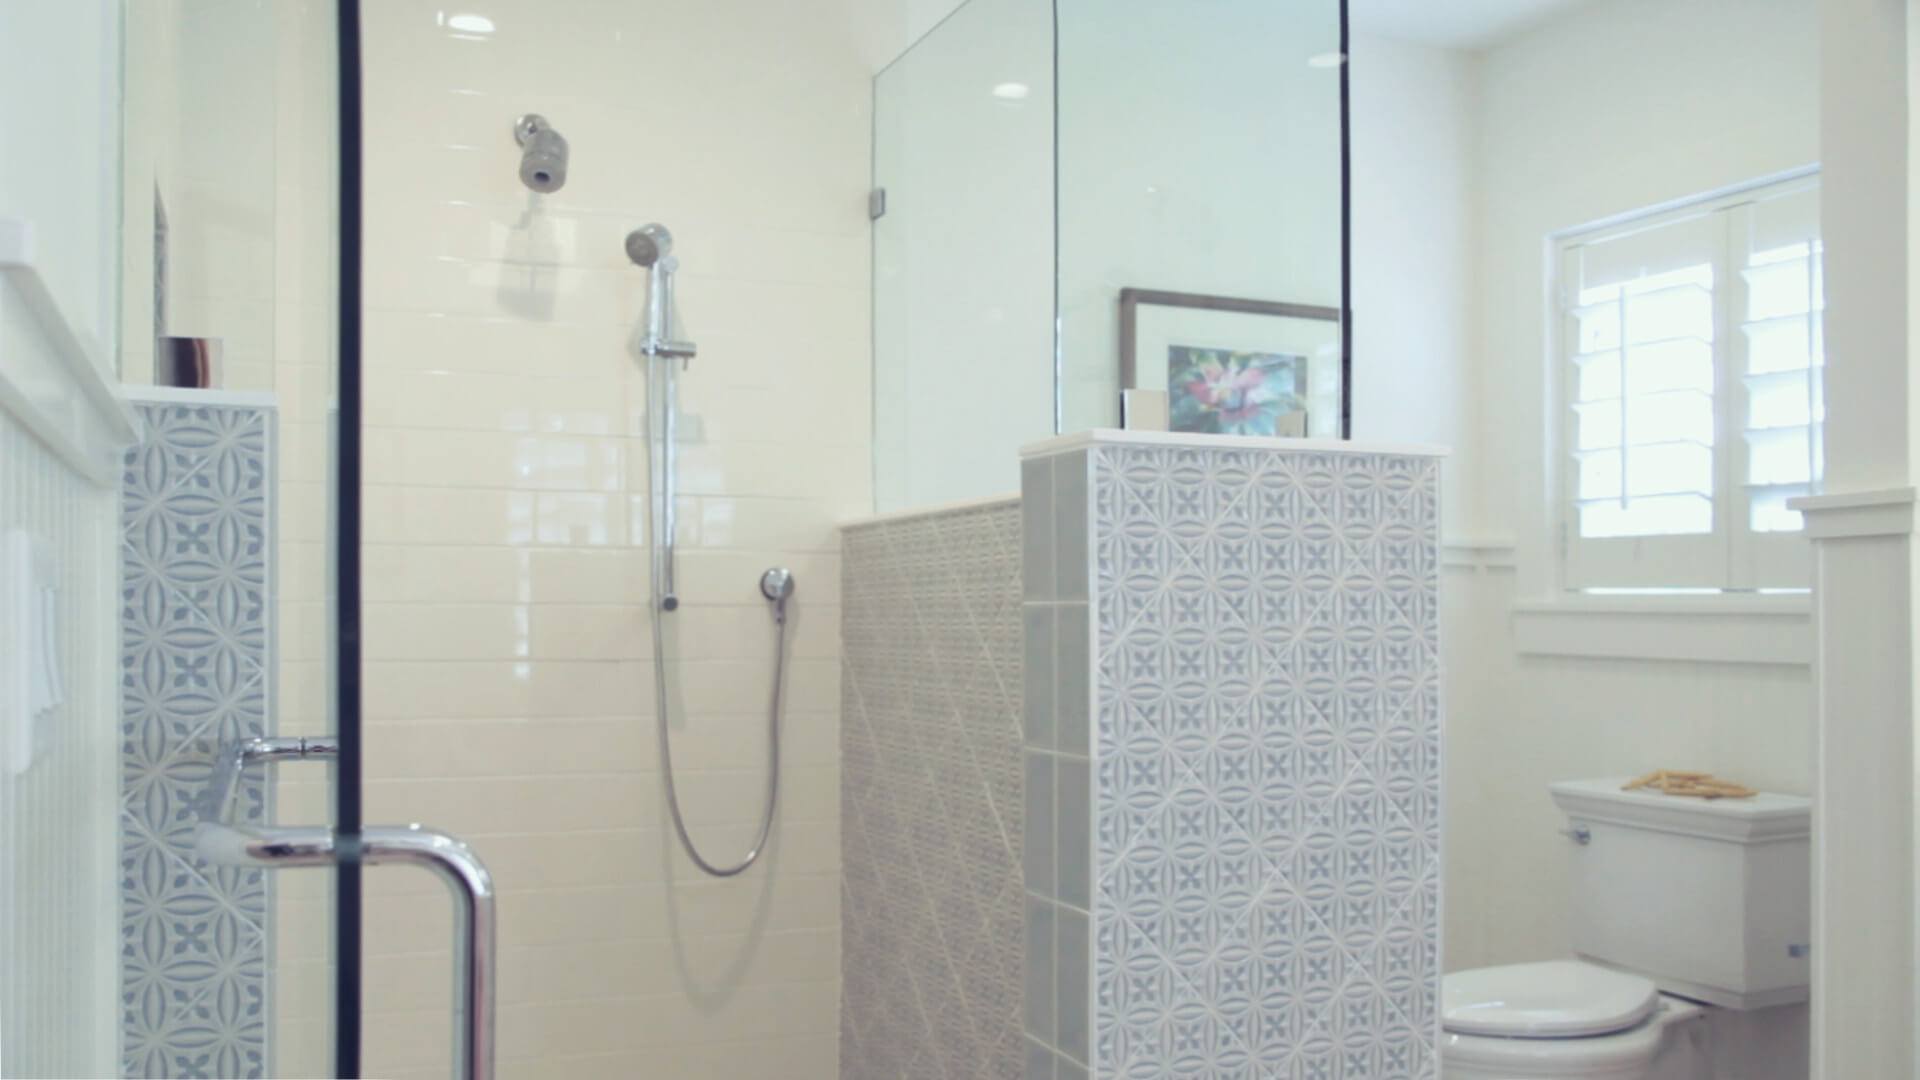 Bathroom transformation should involve a personlized shower system.